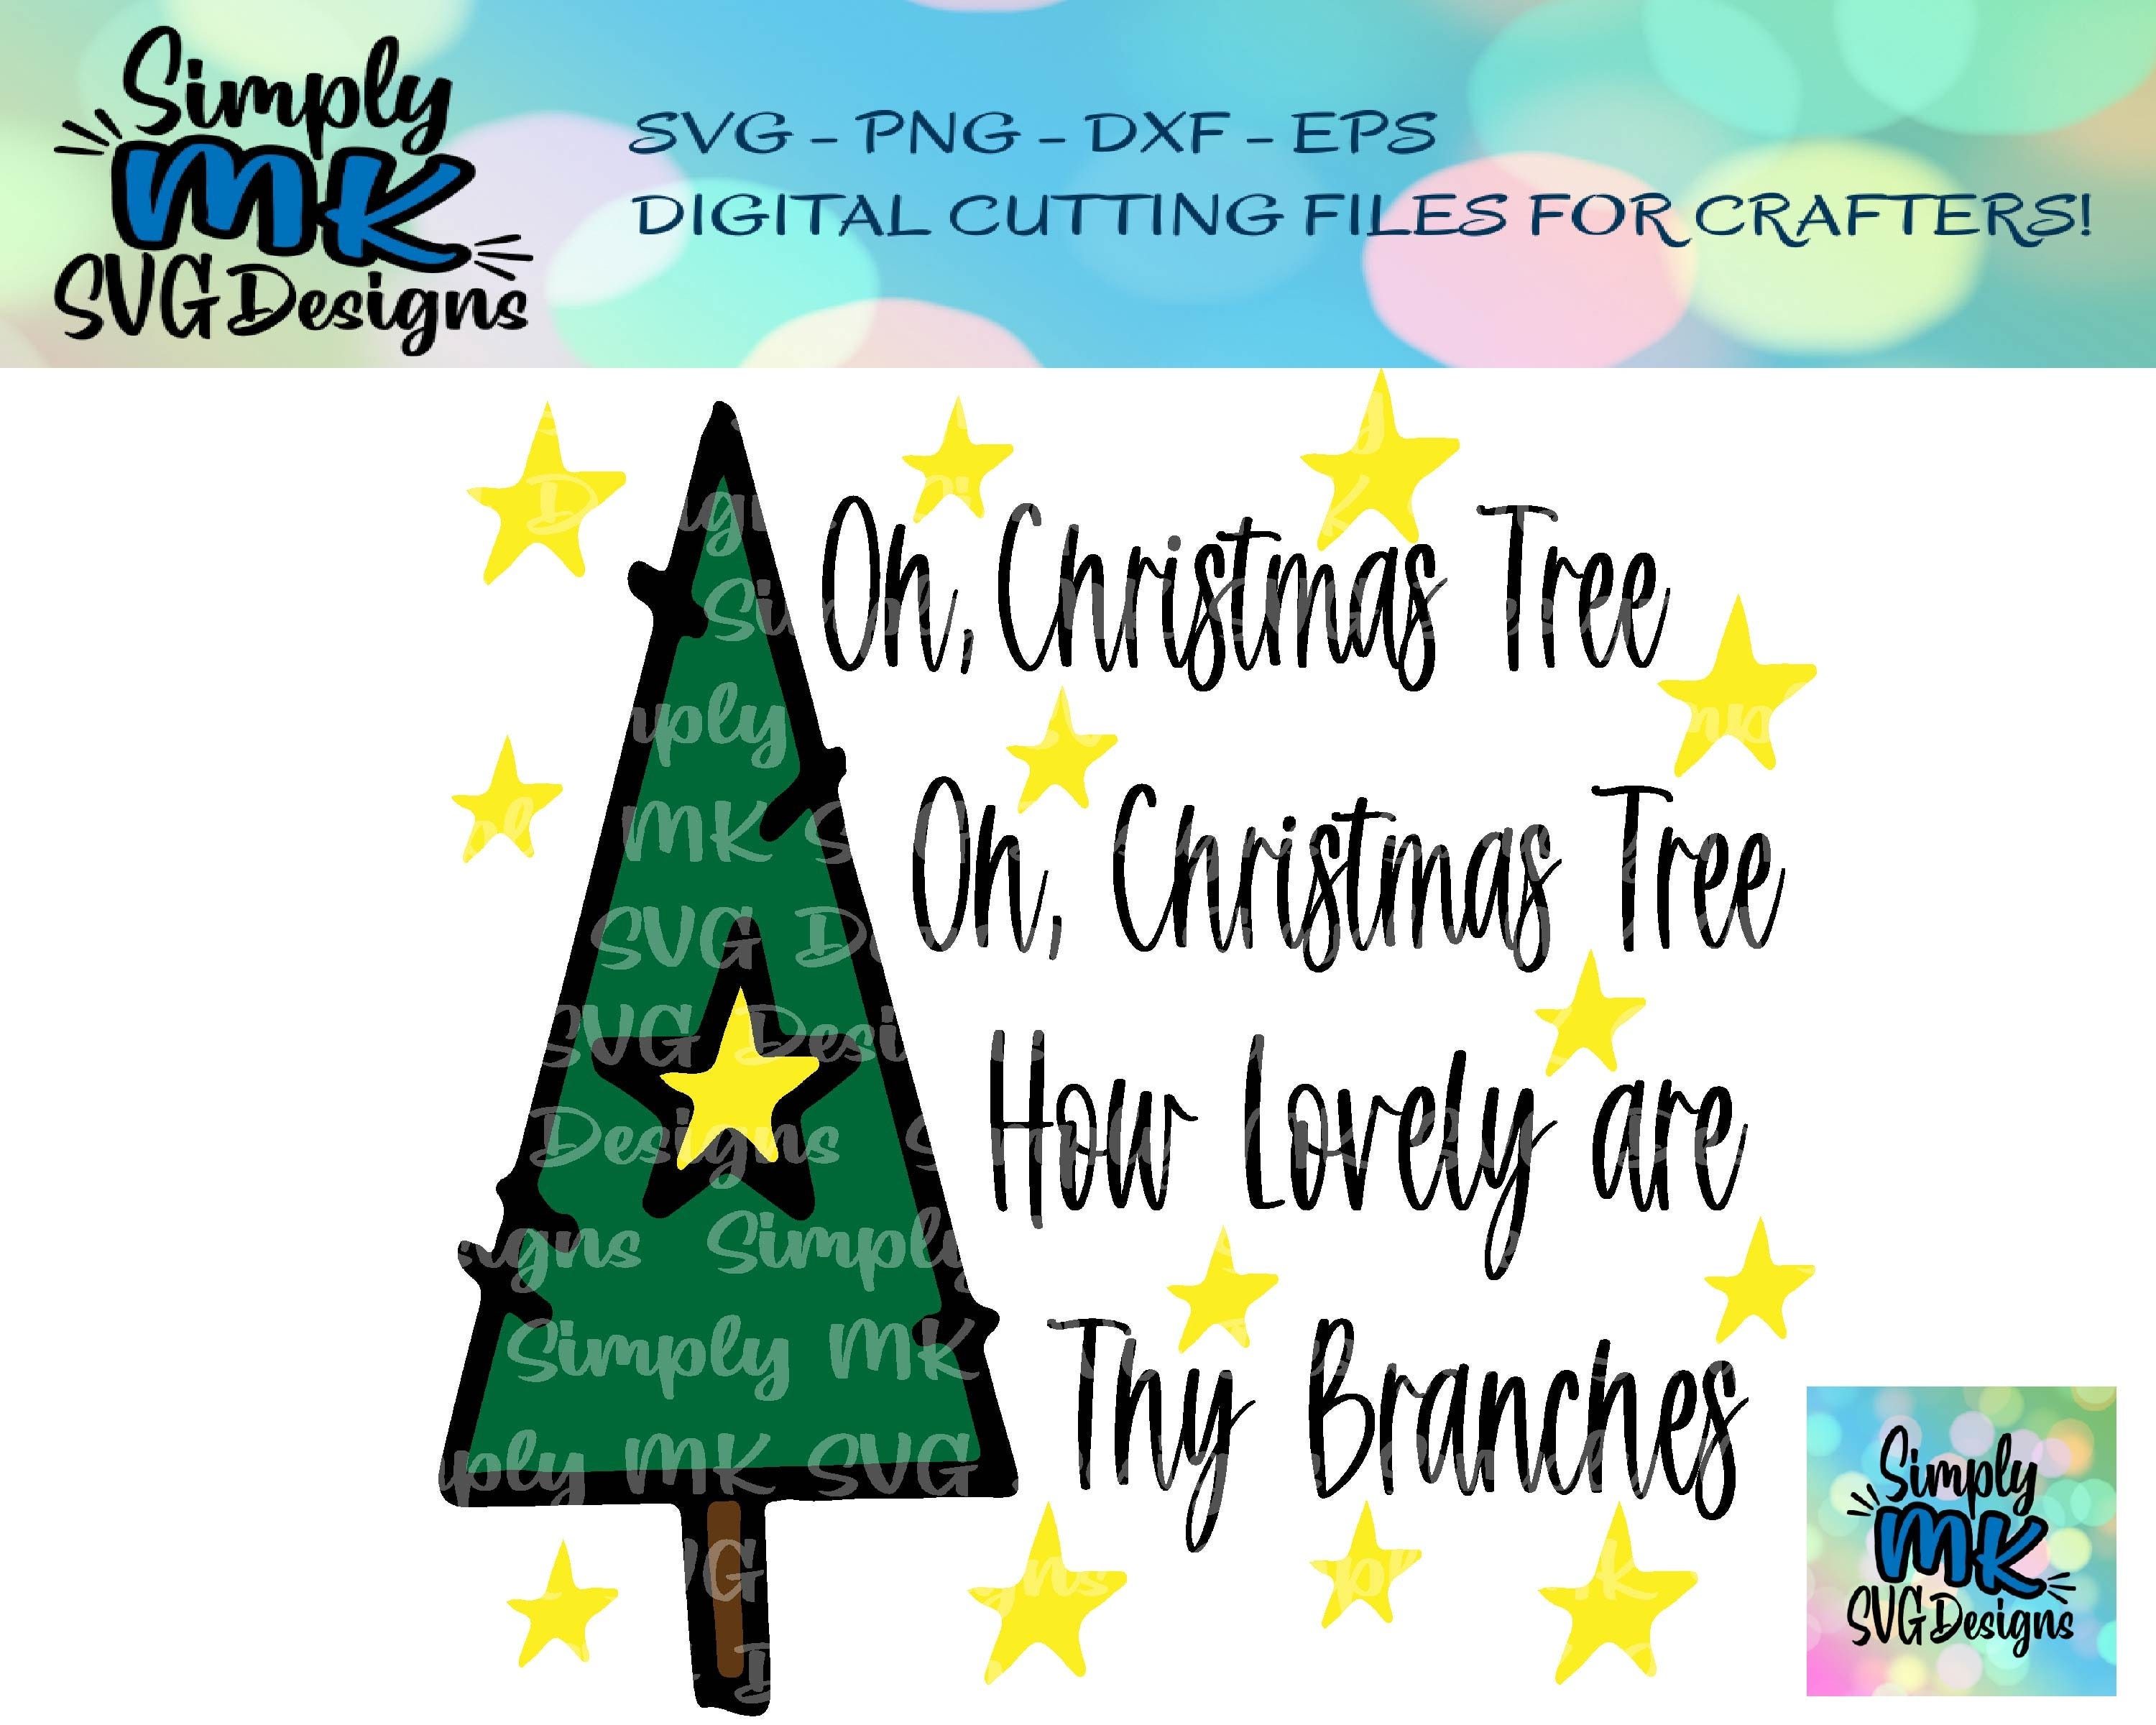 Oh Christmas Tree SVG - Christmas Cut File - Christmas Tree - Sliced - Layered - Holiday Decor - Cricut - Silhouette - svg - png - eps - dxf